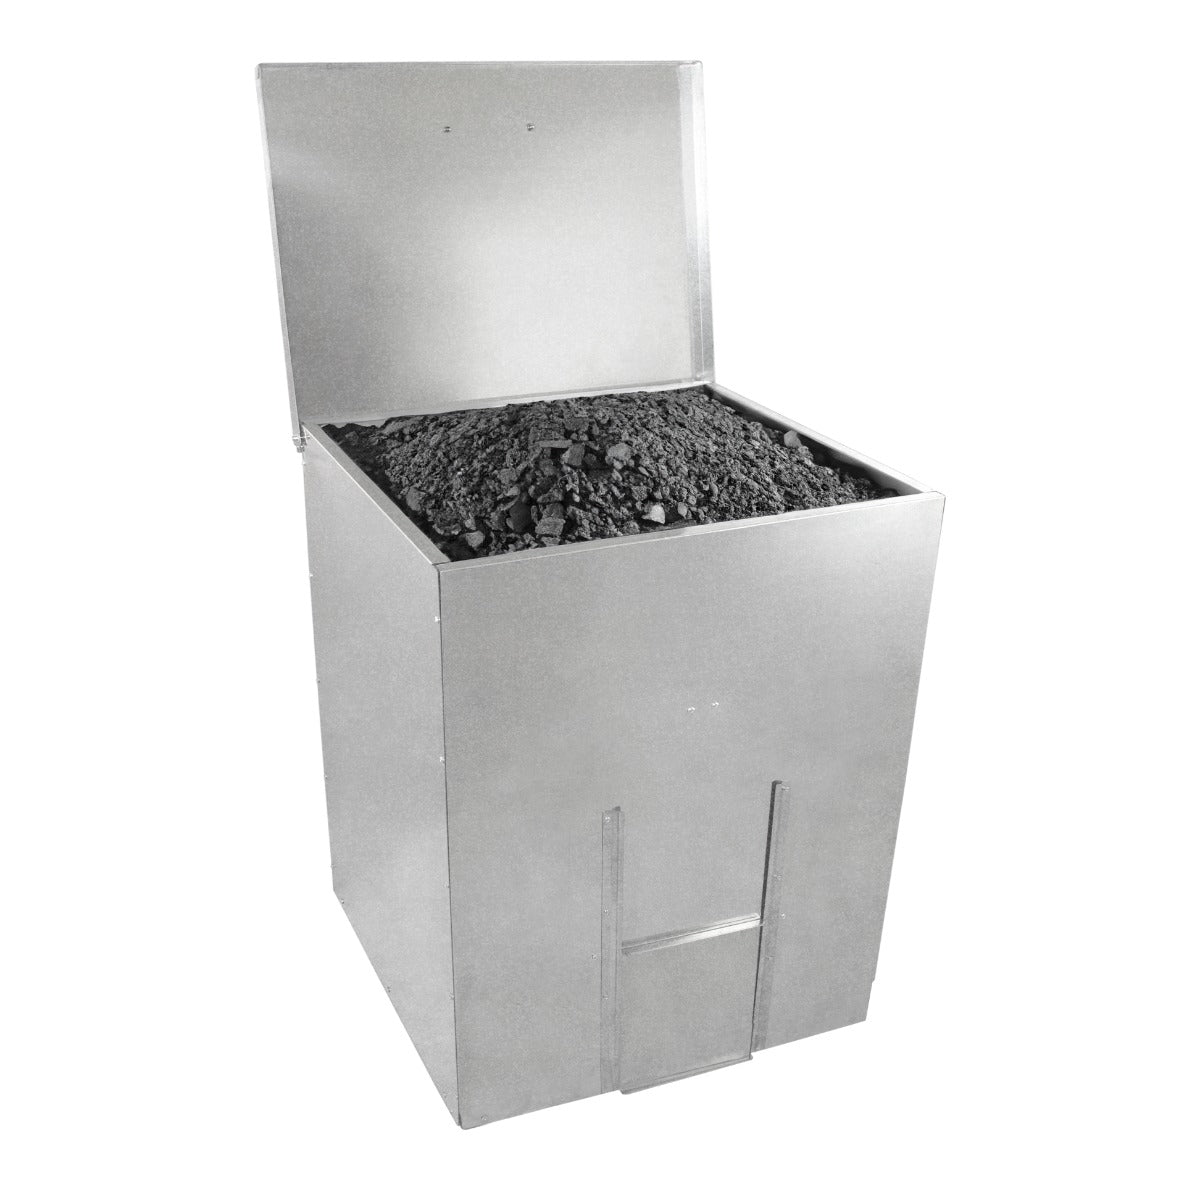 Coal Bunker - 350kg